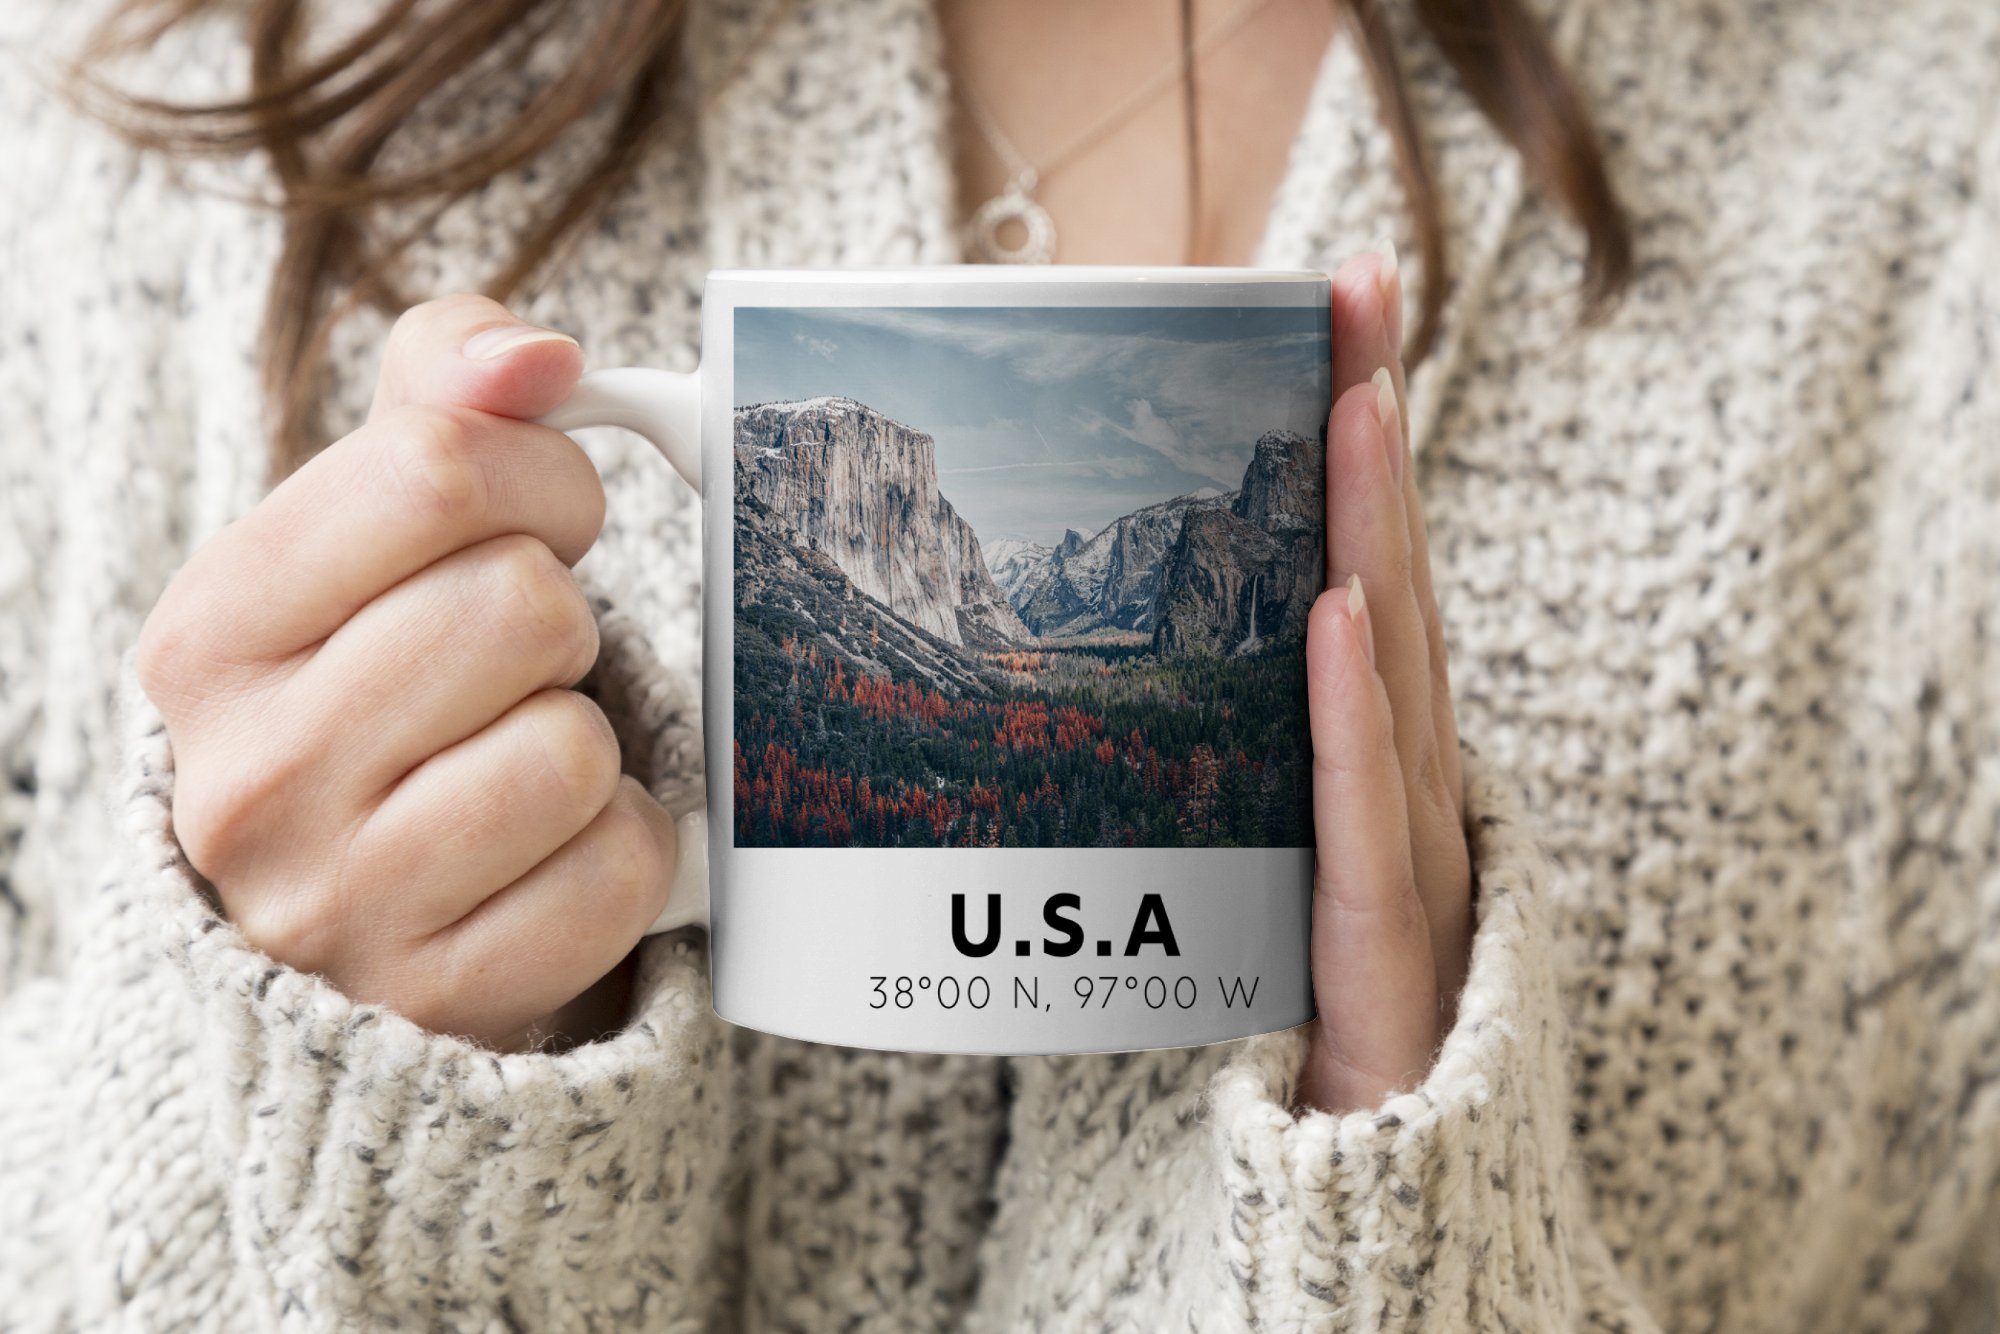 Teetasse, - - Kaffeetassen, Teetasse, Tasse Wald, MuchoWow - Keramik, Geschenk Berge Wyoming Yosemite Amerika - Becher,